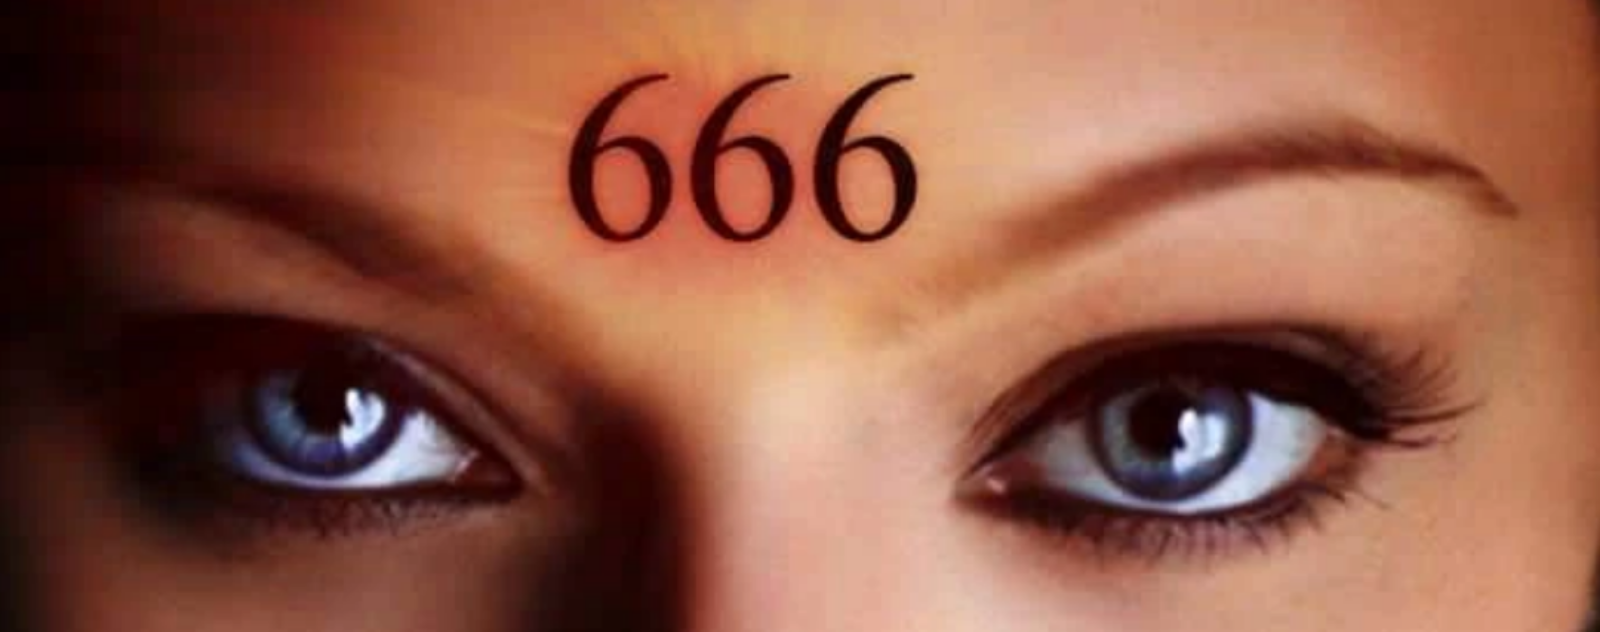 666 mark on the forehead